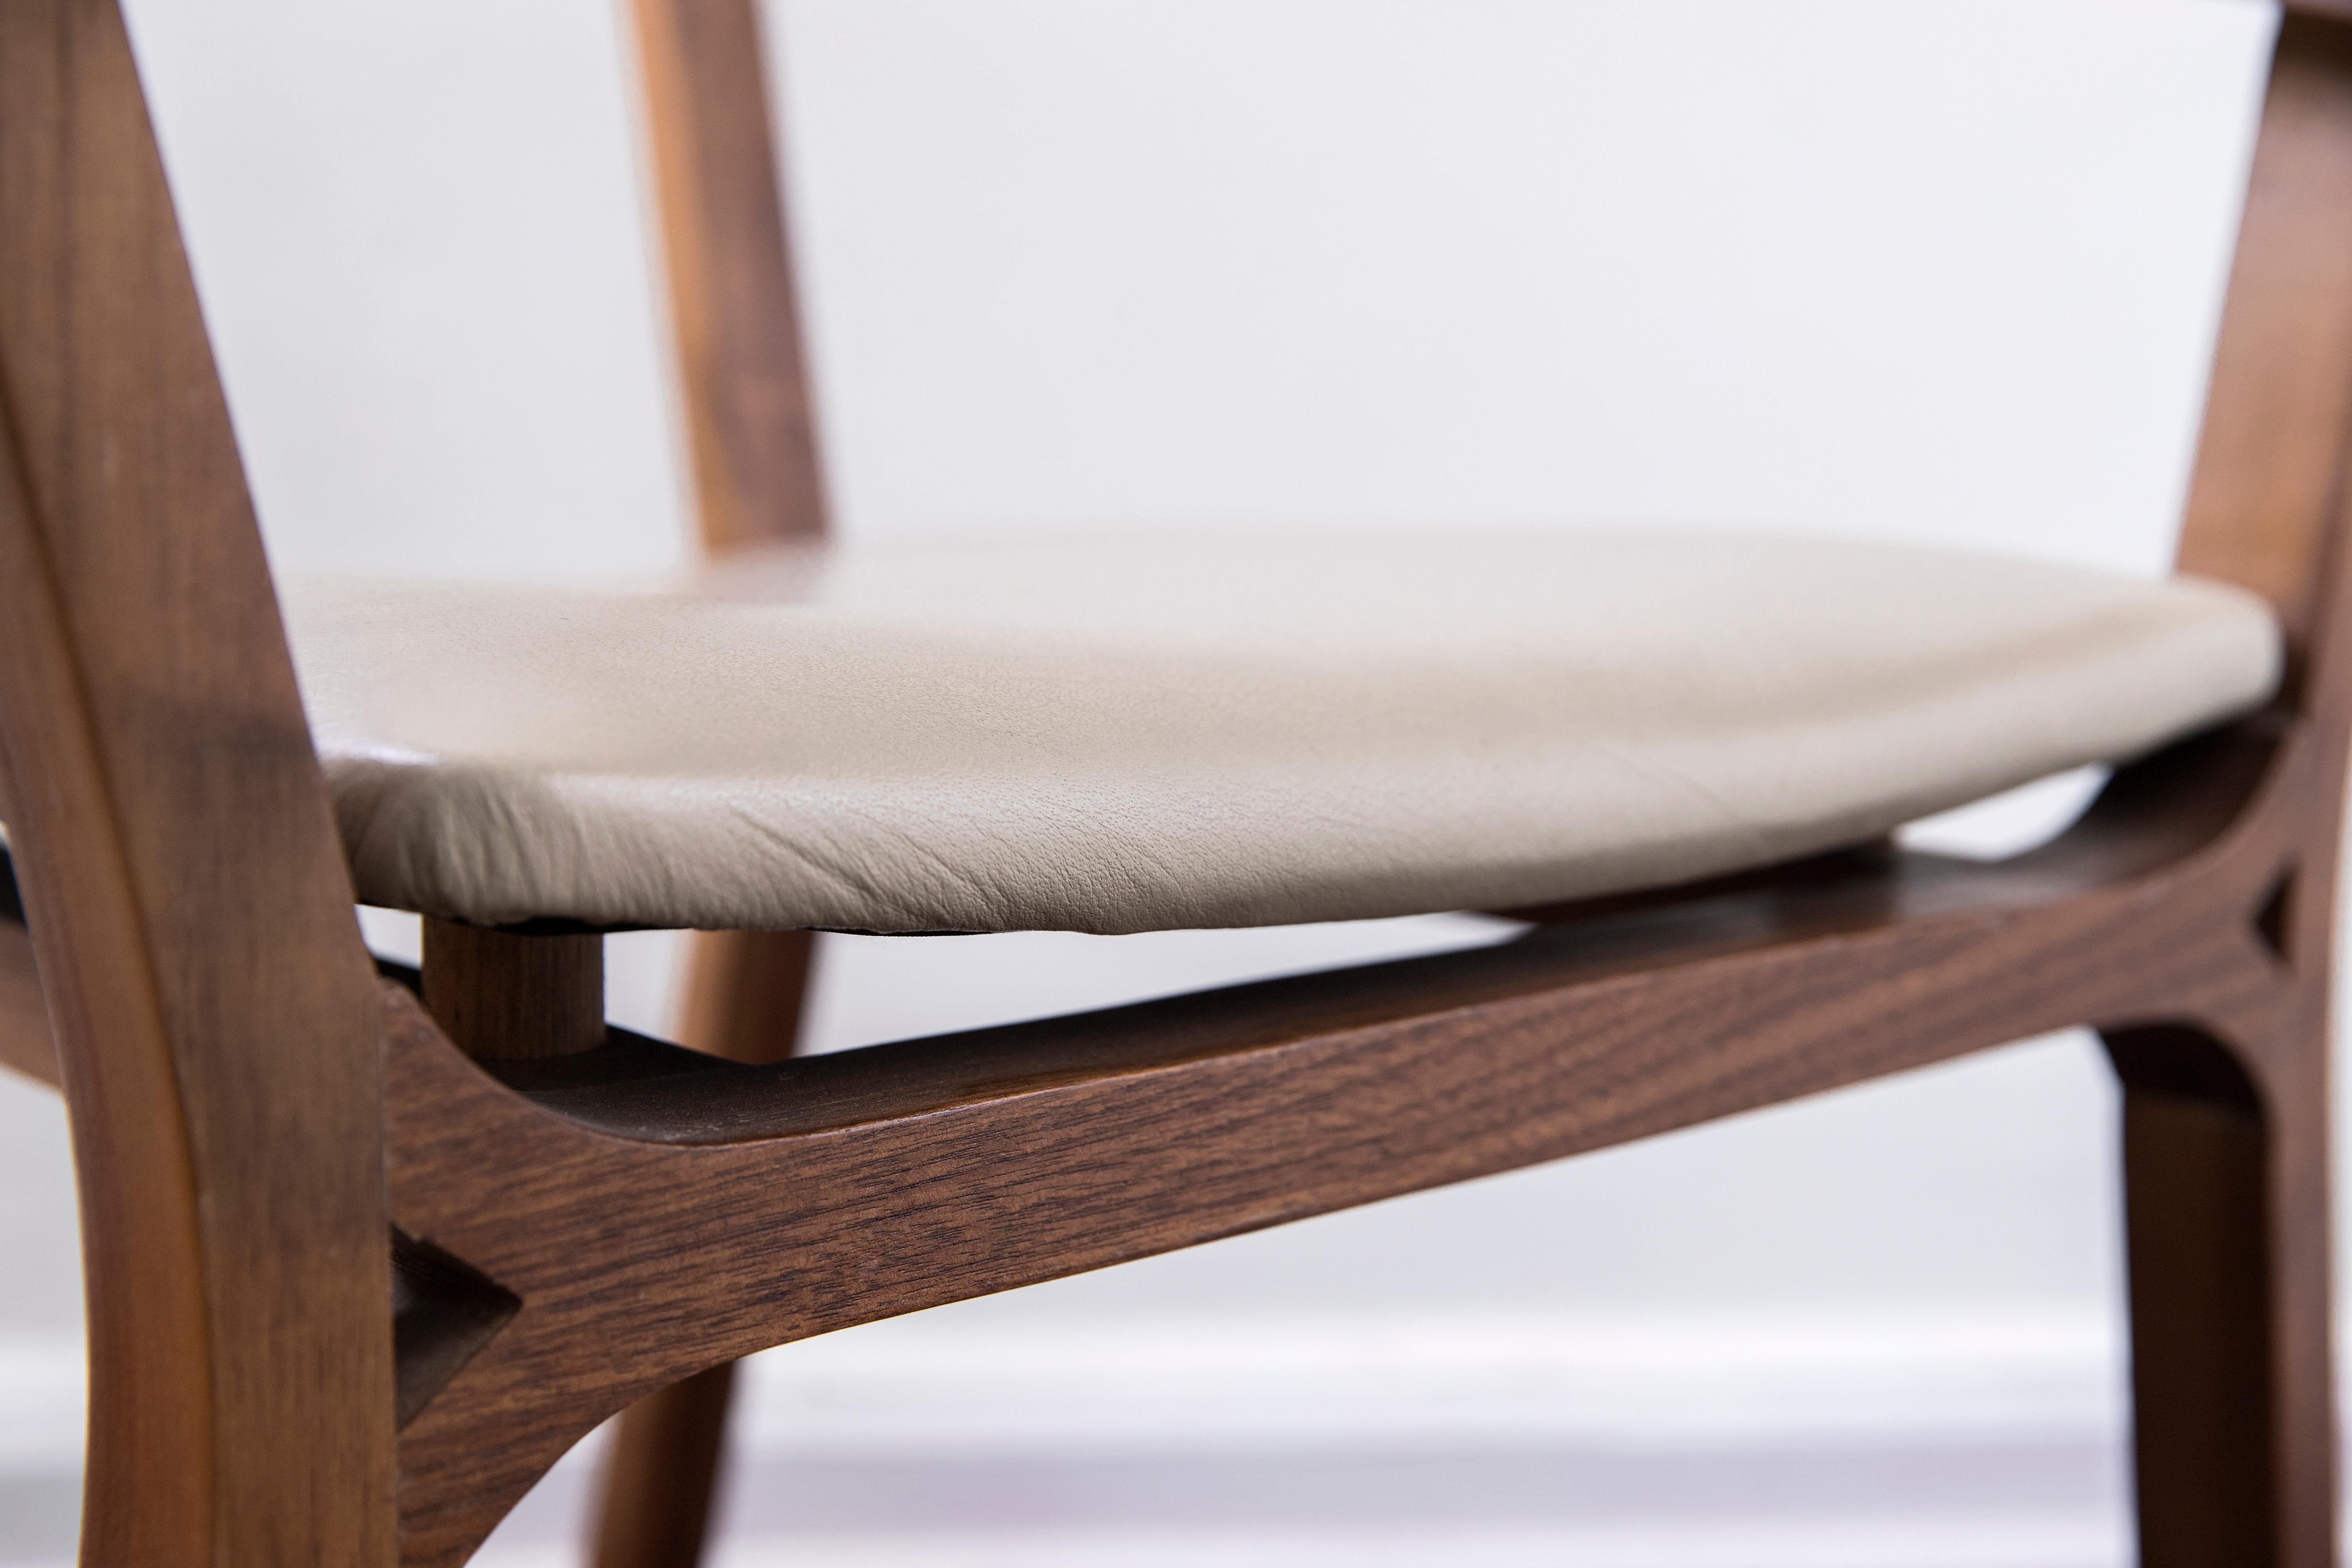 Armchair in Walnut Hardwood by Obiect, Mexican Contemporary Design (Mexikanisch) im Angebot